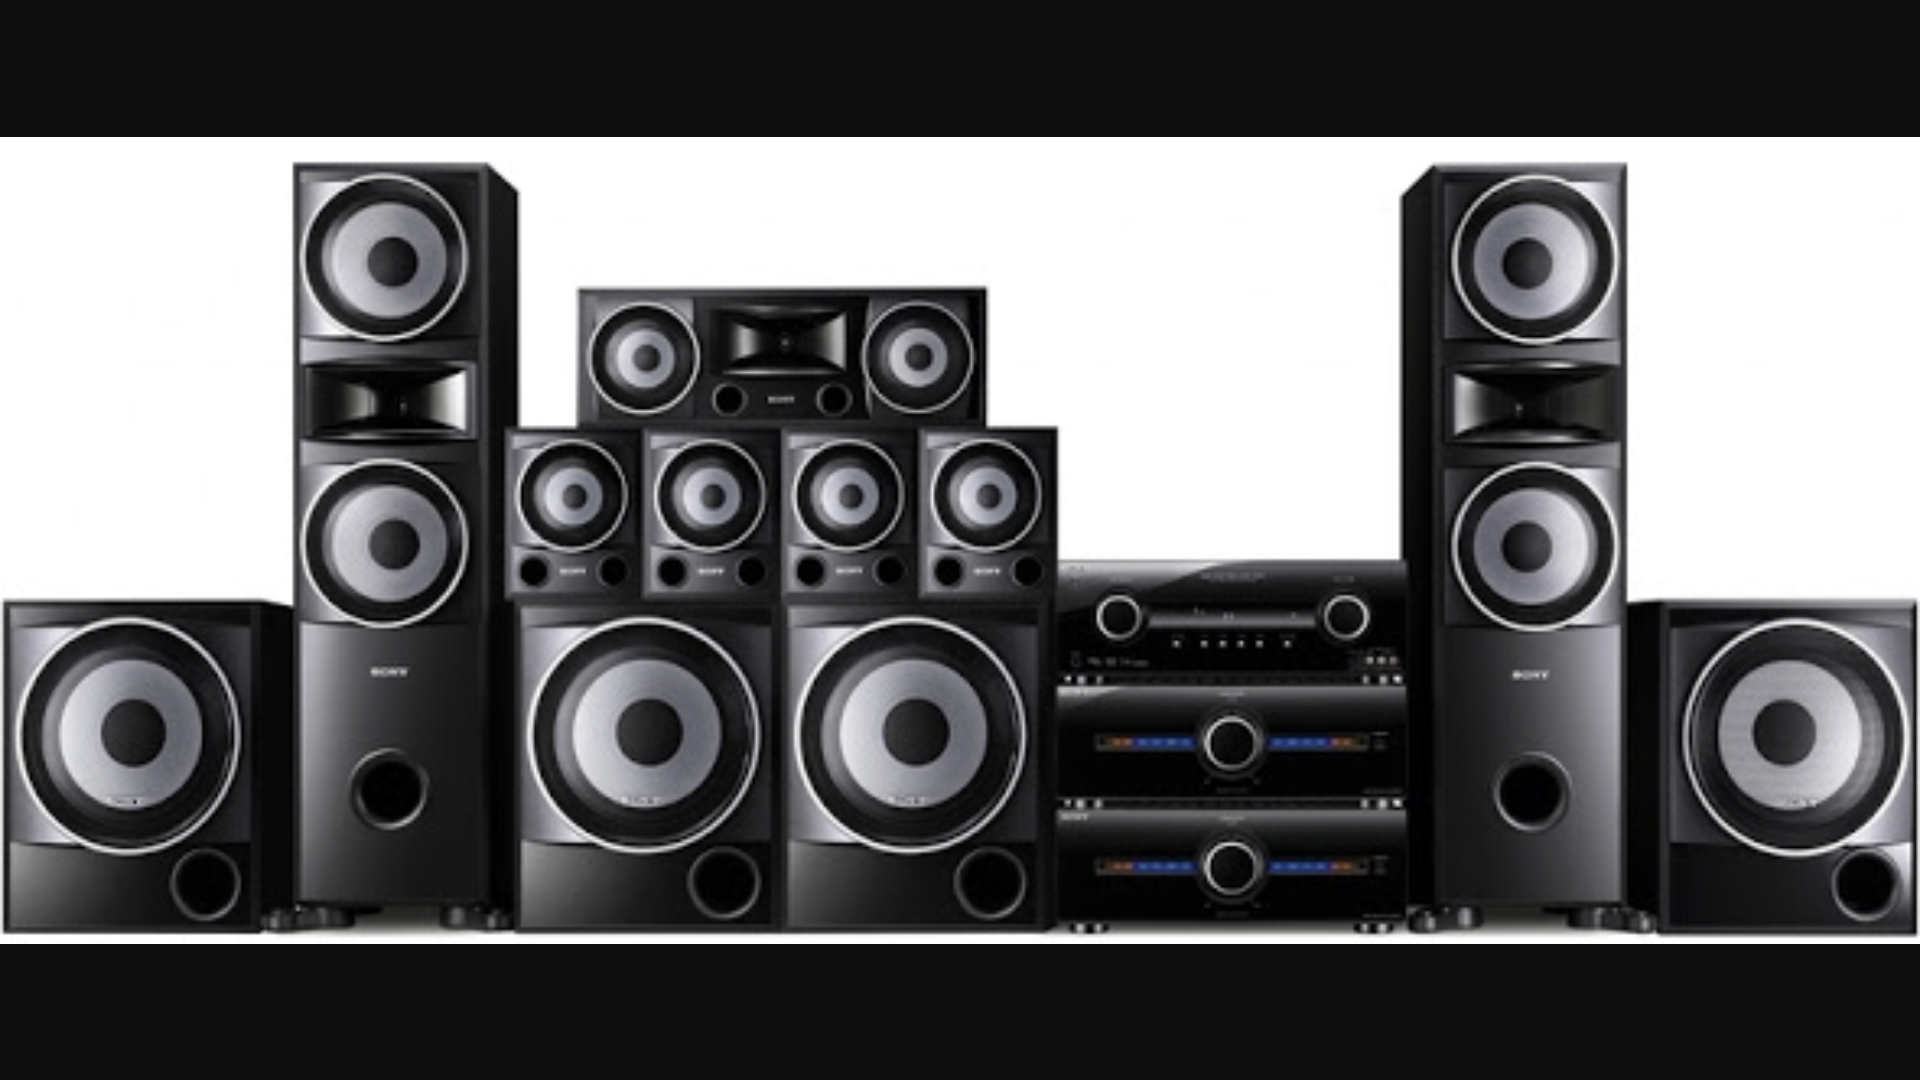 SONY Muteki 7.4 Surround Sound Home Theater System. LOUD